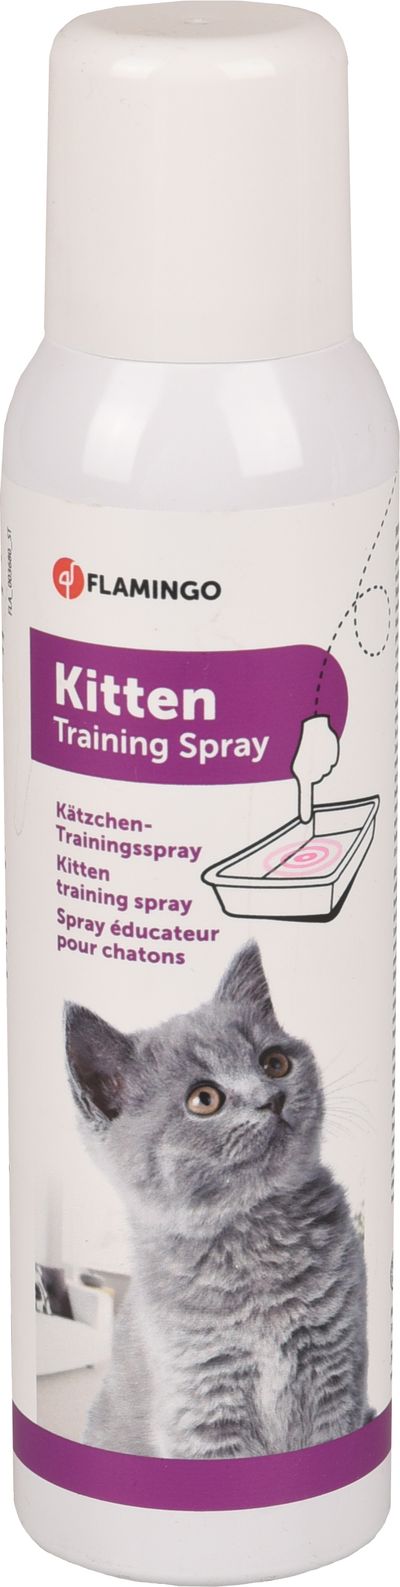 Spray educateur pour chatons 120ml